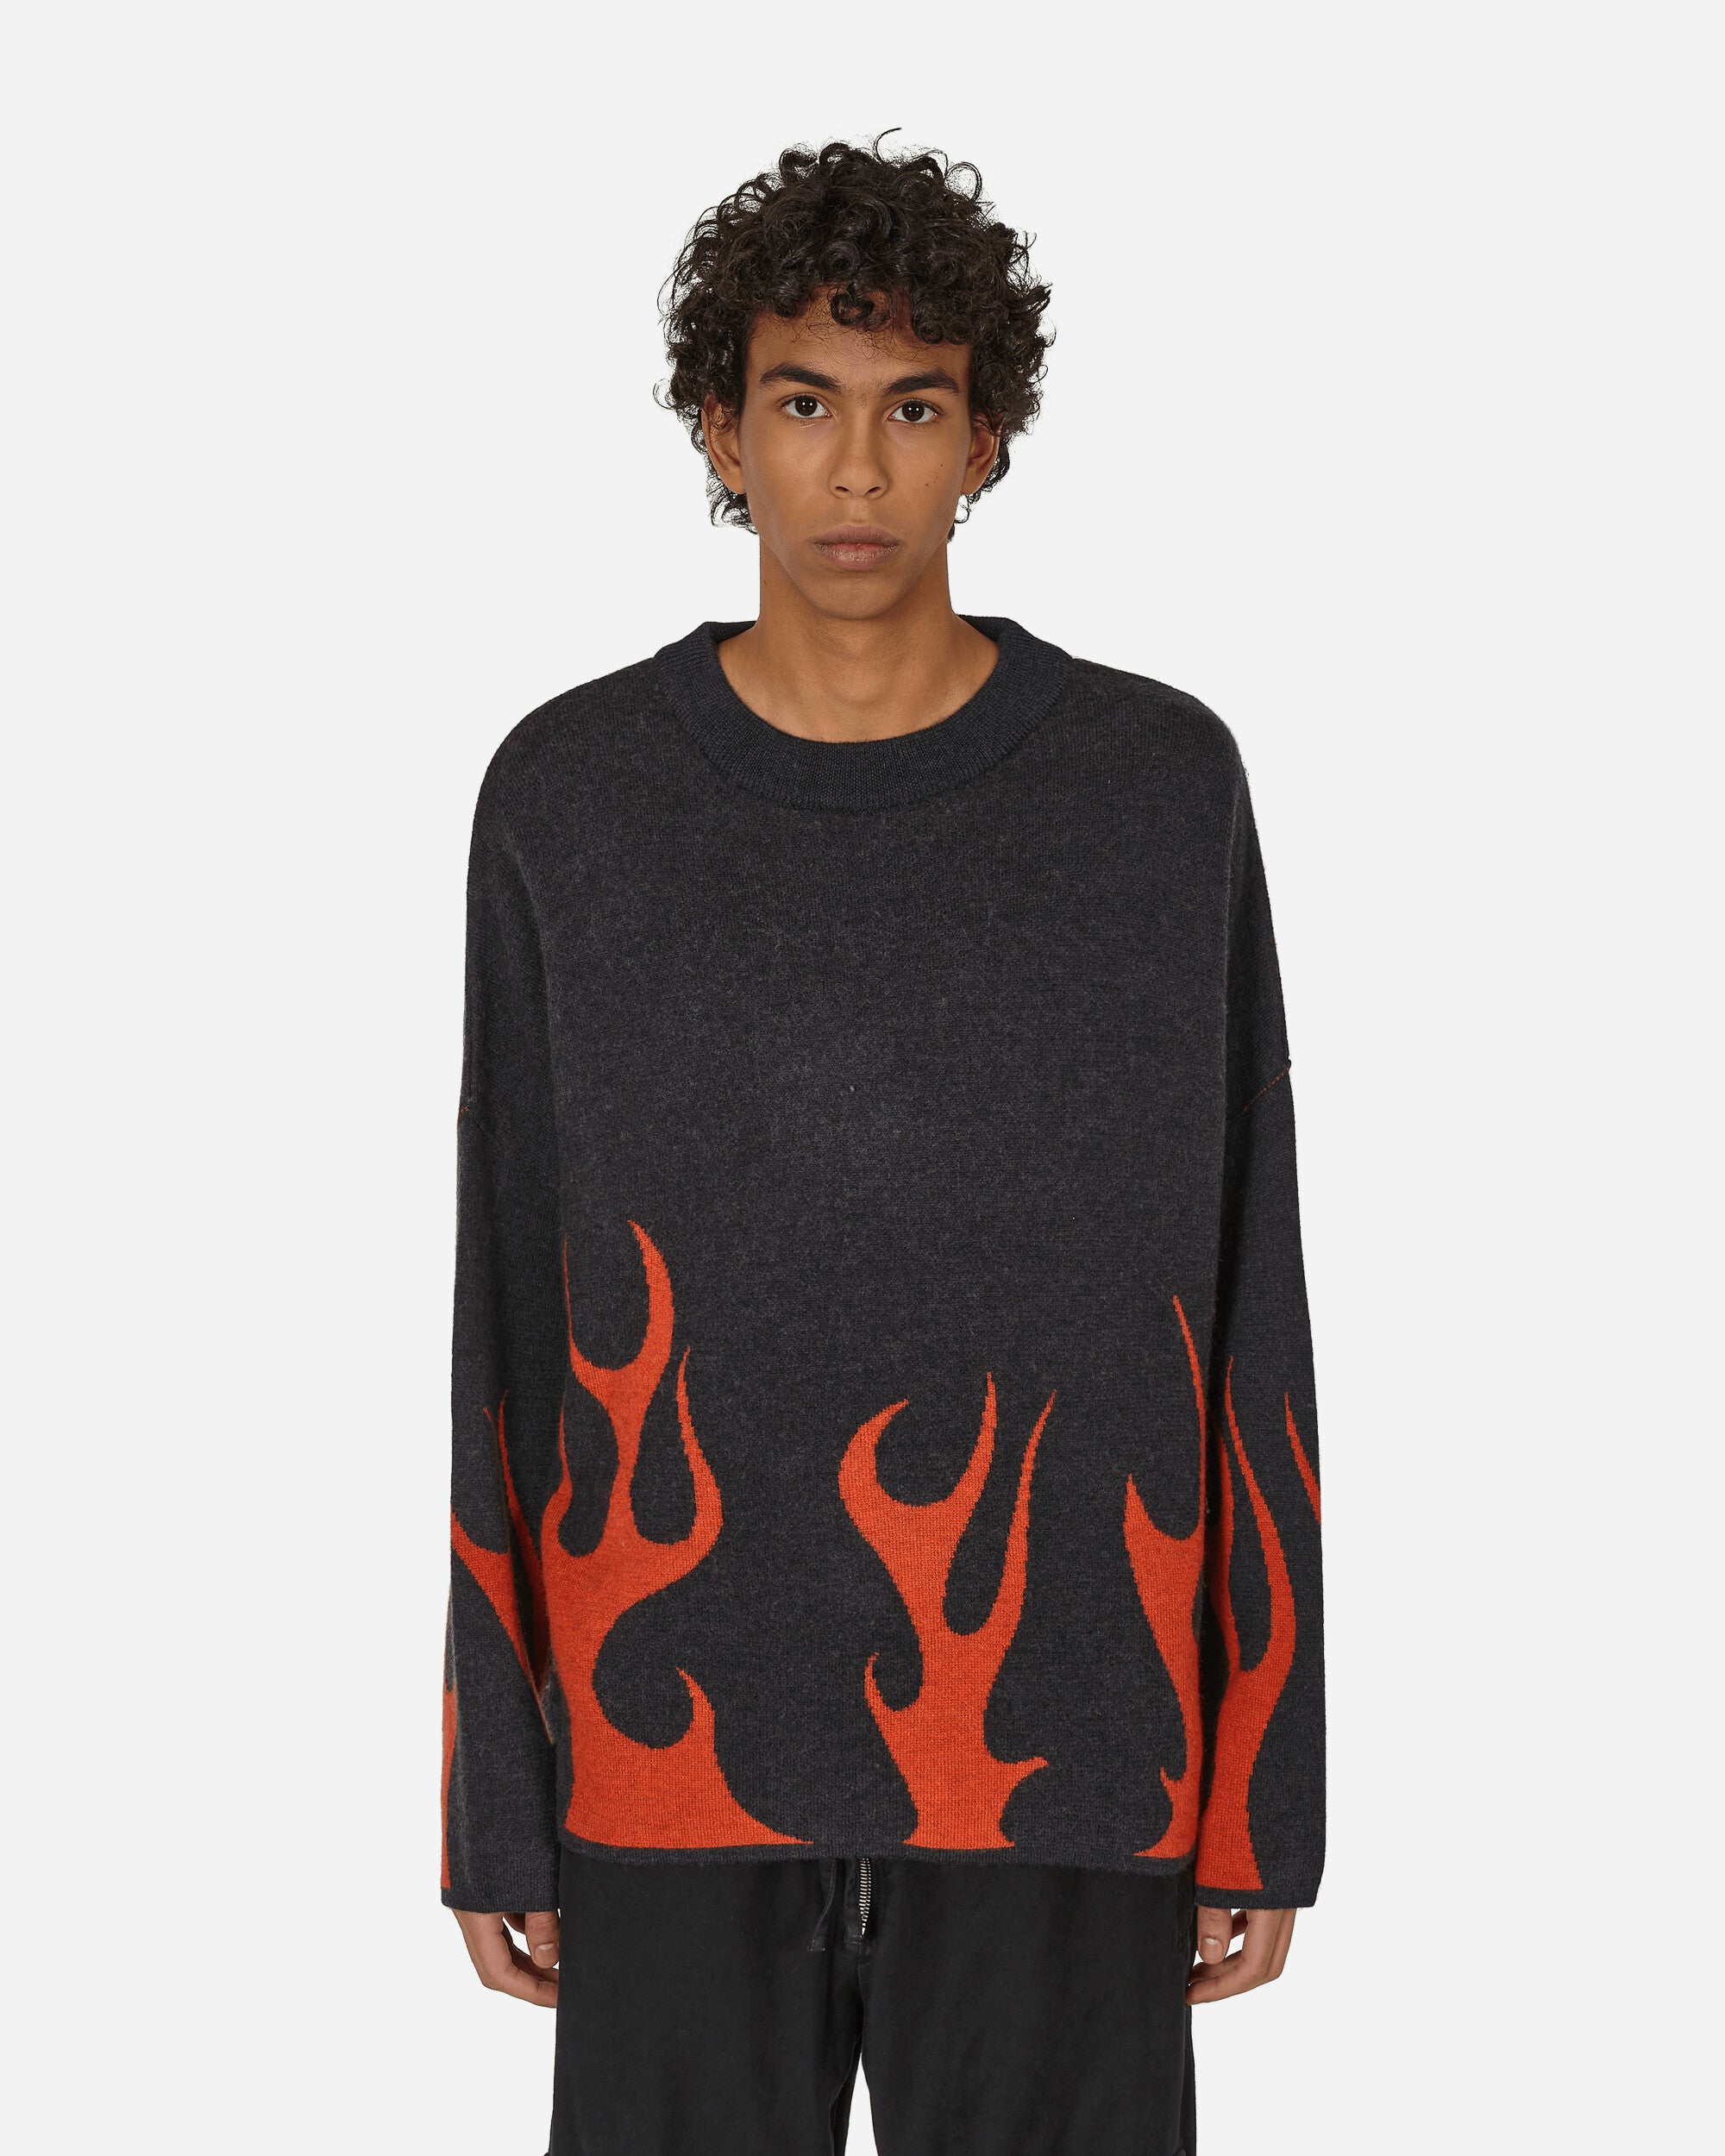 Haydenshapes Flame Game Knitted Sweater Black/Red Sweatshirts Crewneck HS23SN6001 020